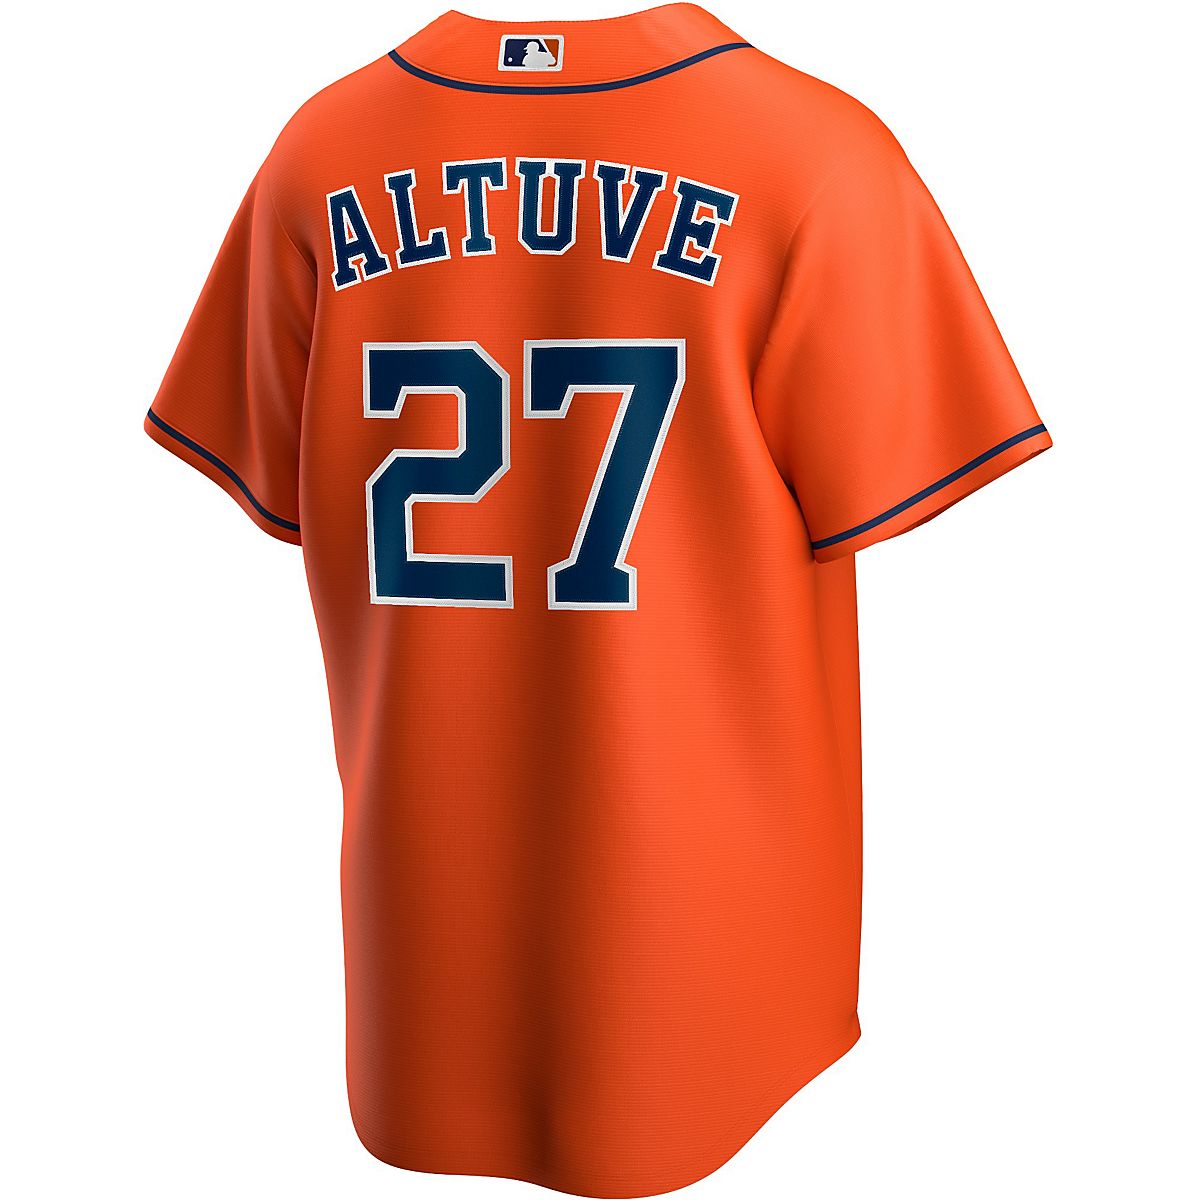 Astros Jose Altuve Throwback replica jersey size Xl